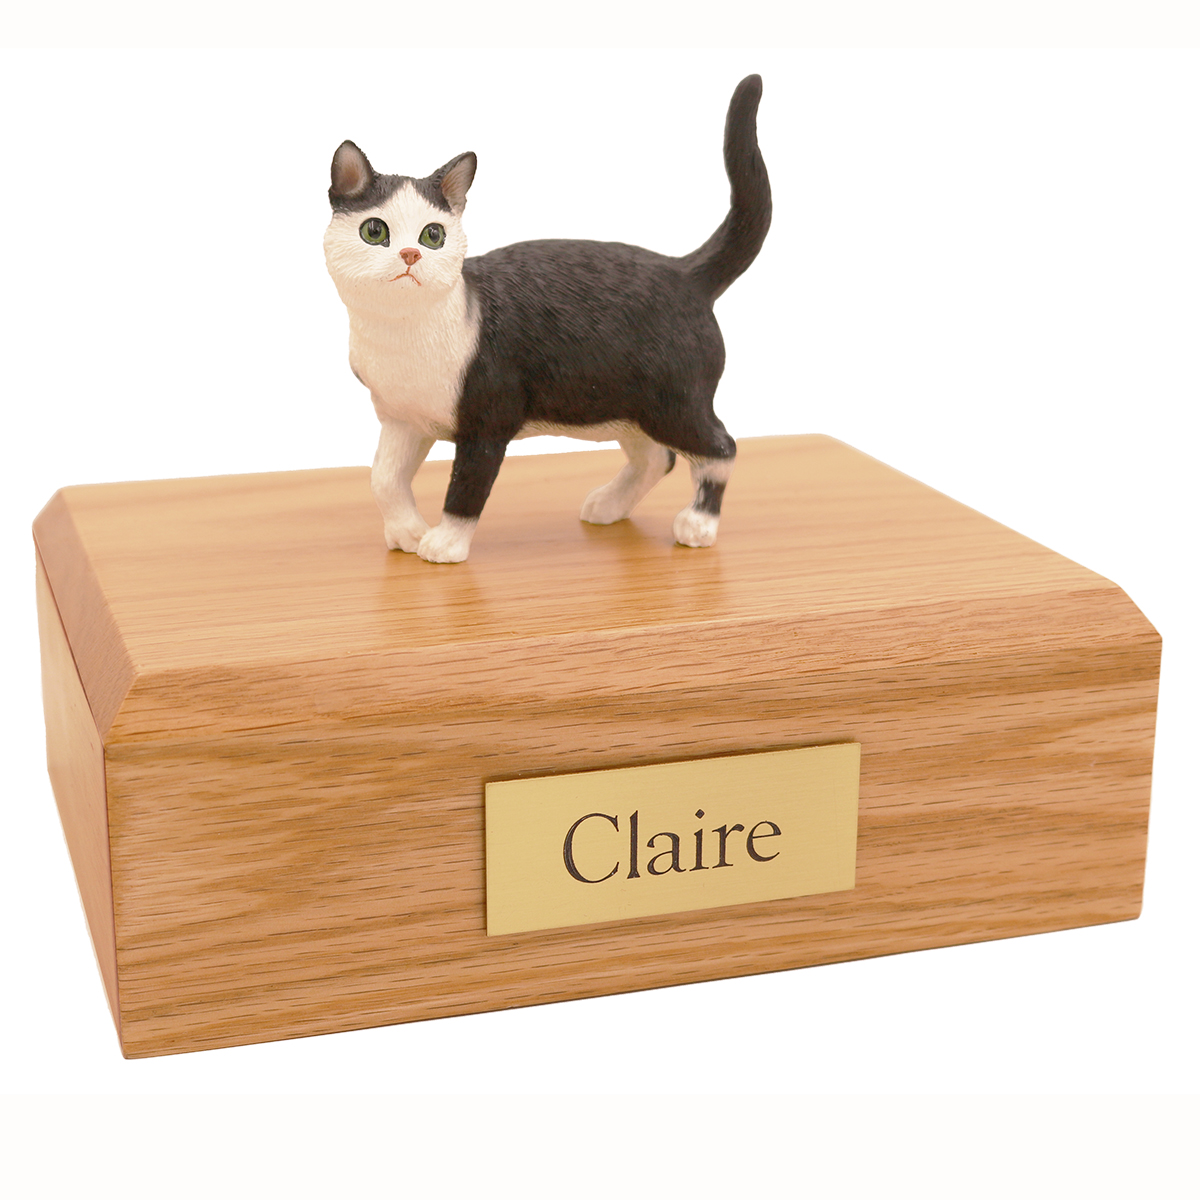 Cat, Tabby, Shorthair Standing - Figurine Urn